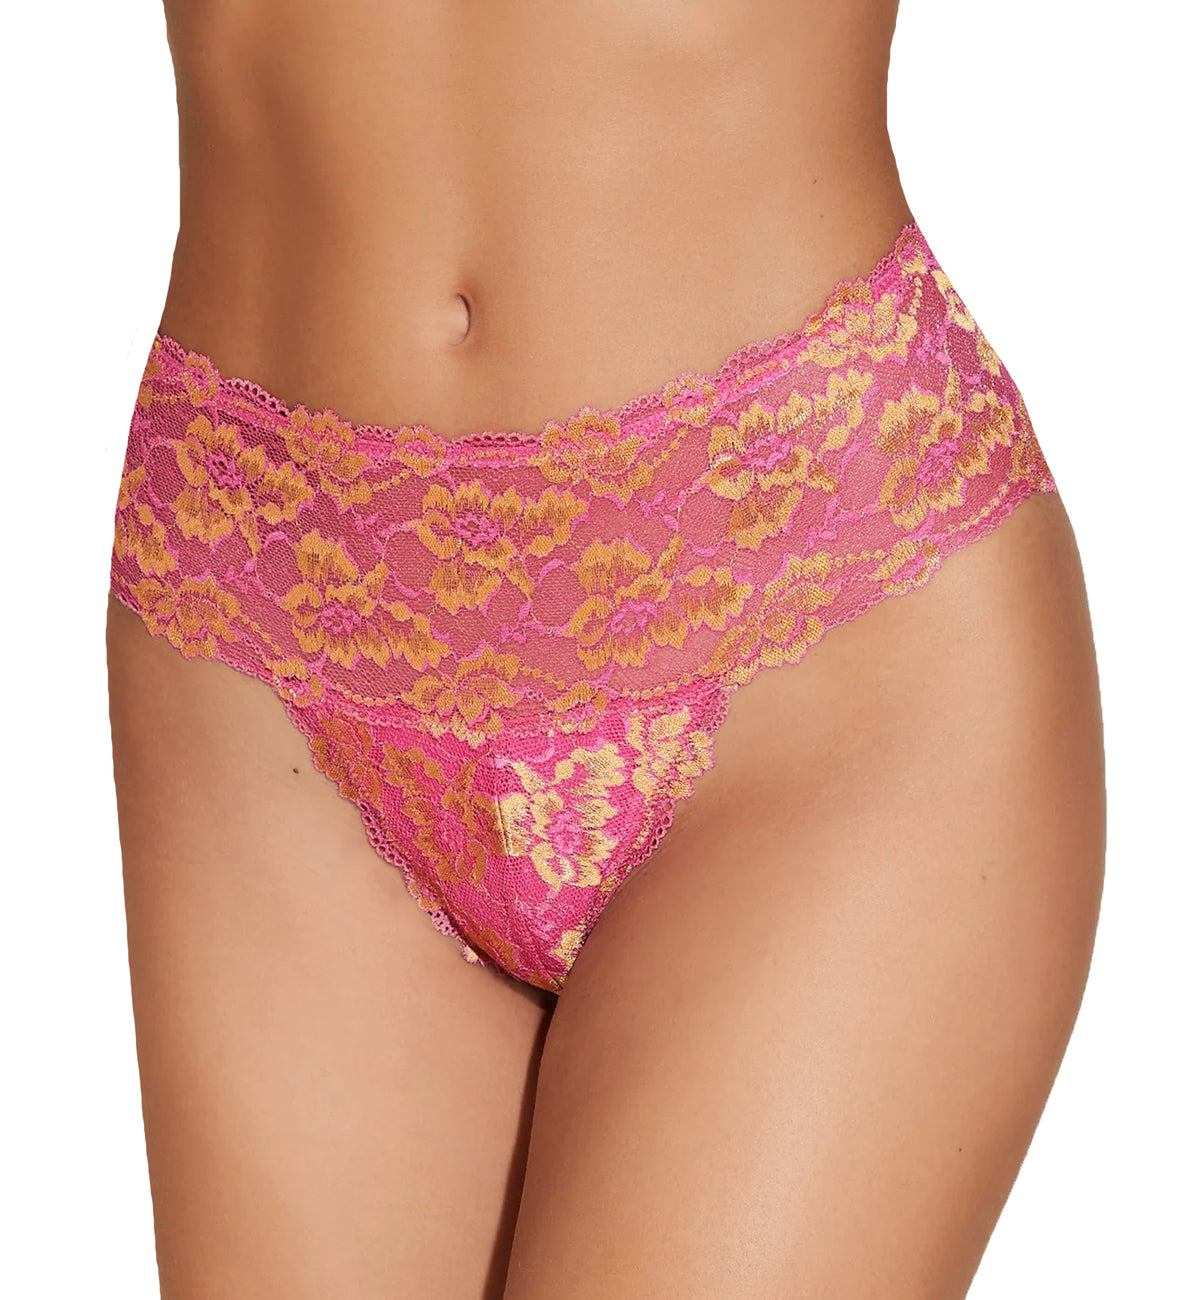 Cosabella Savona High Waist Brief Panty (SAVON0562),Small,Rani Pink/Gold - Rani Pink/Gold,Small